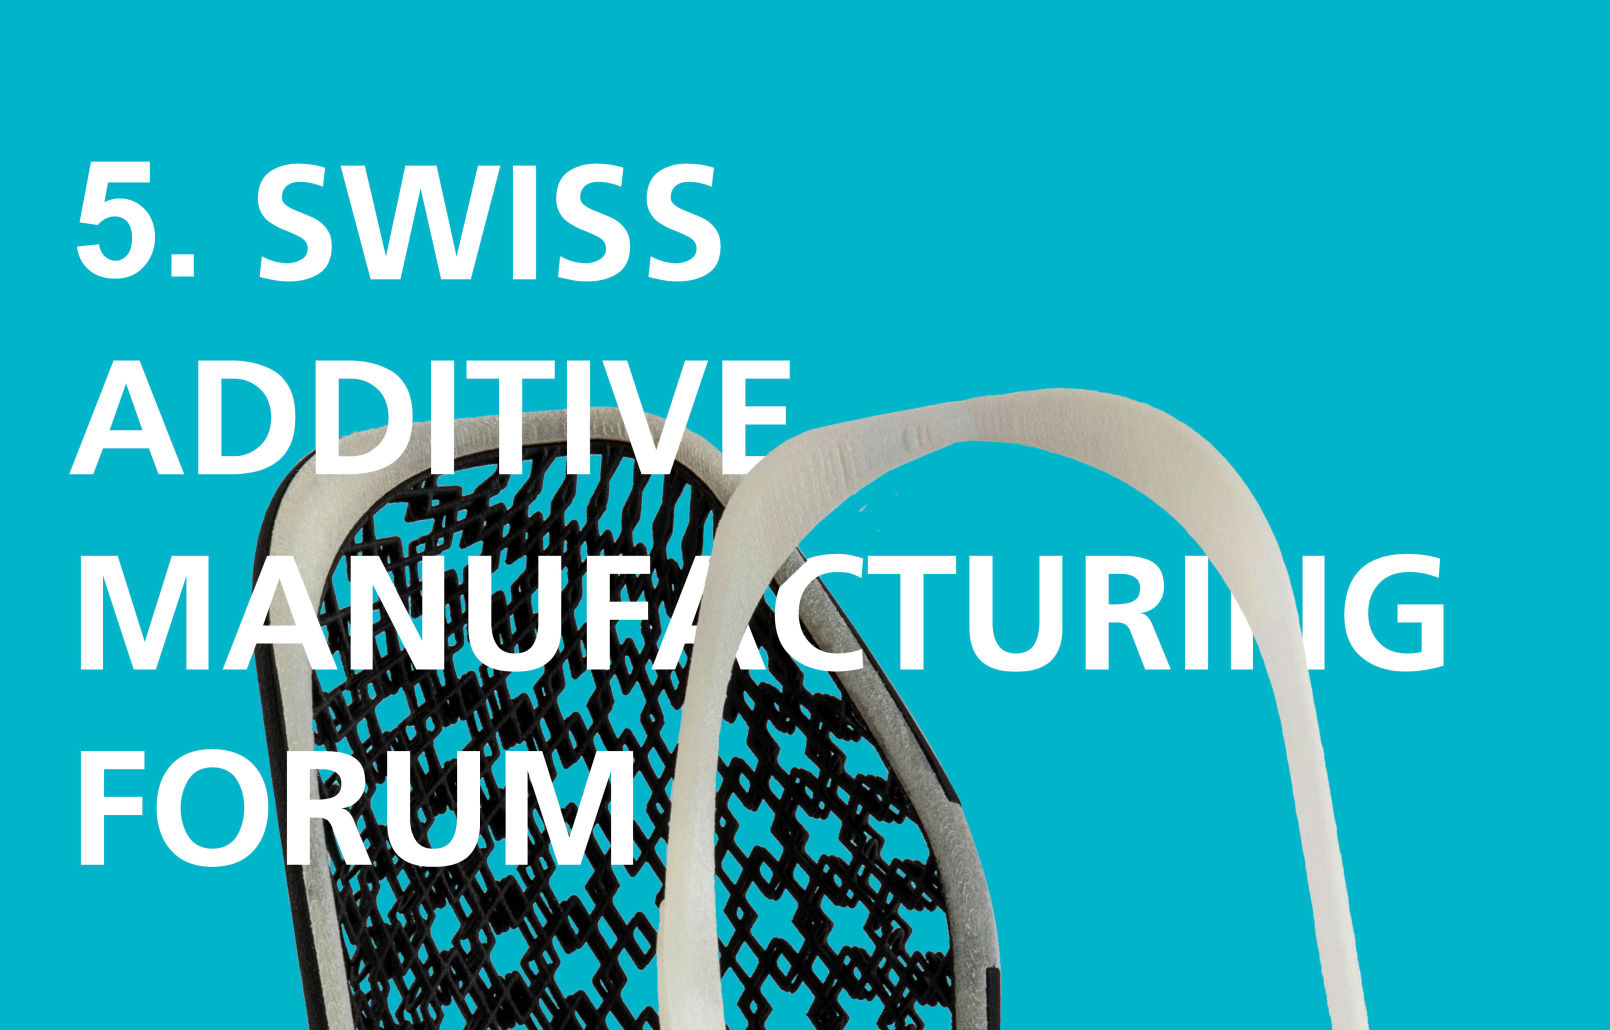 5. Swiss Additive Manufacturing Forum